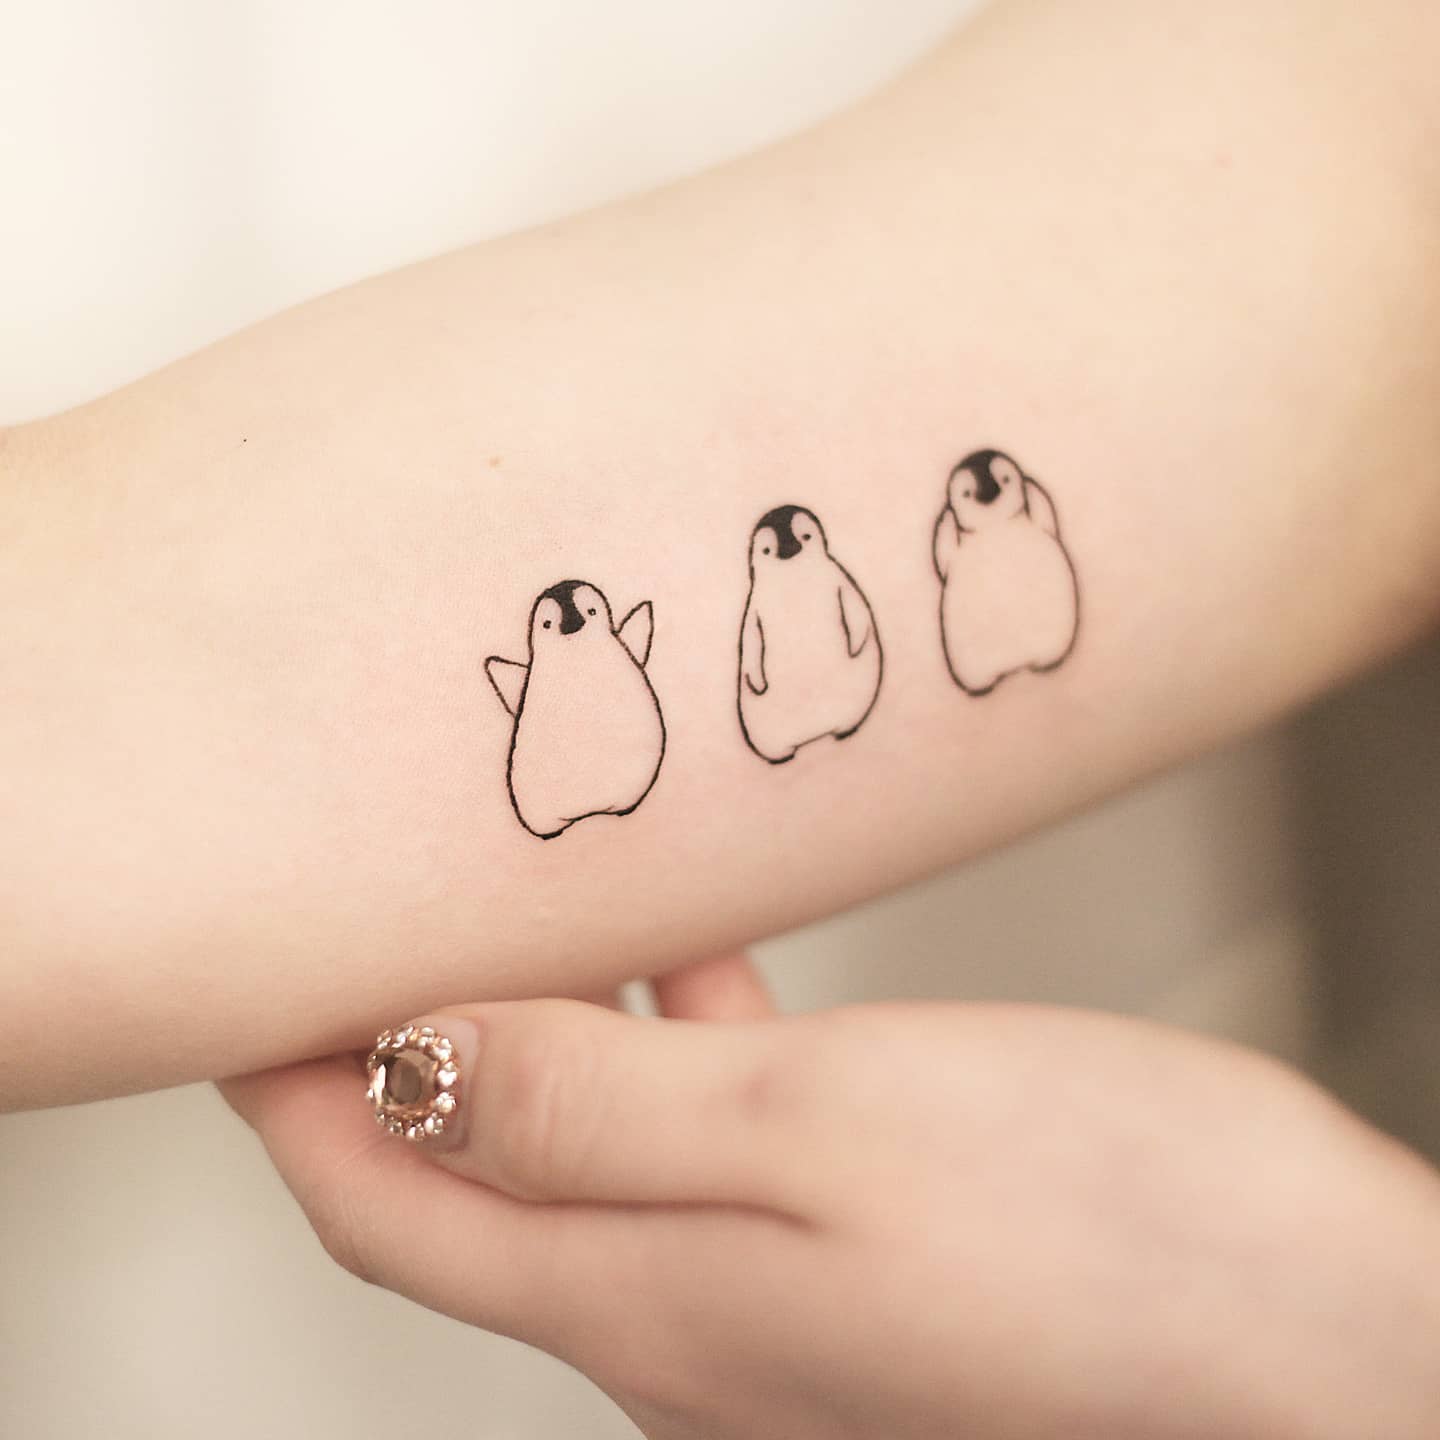 Penguin tattoofor women by vandal tattoo